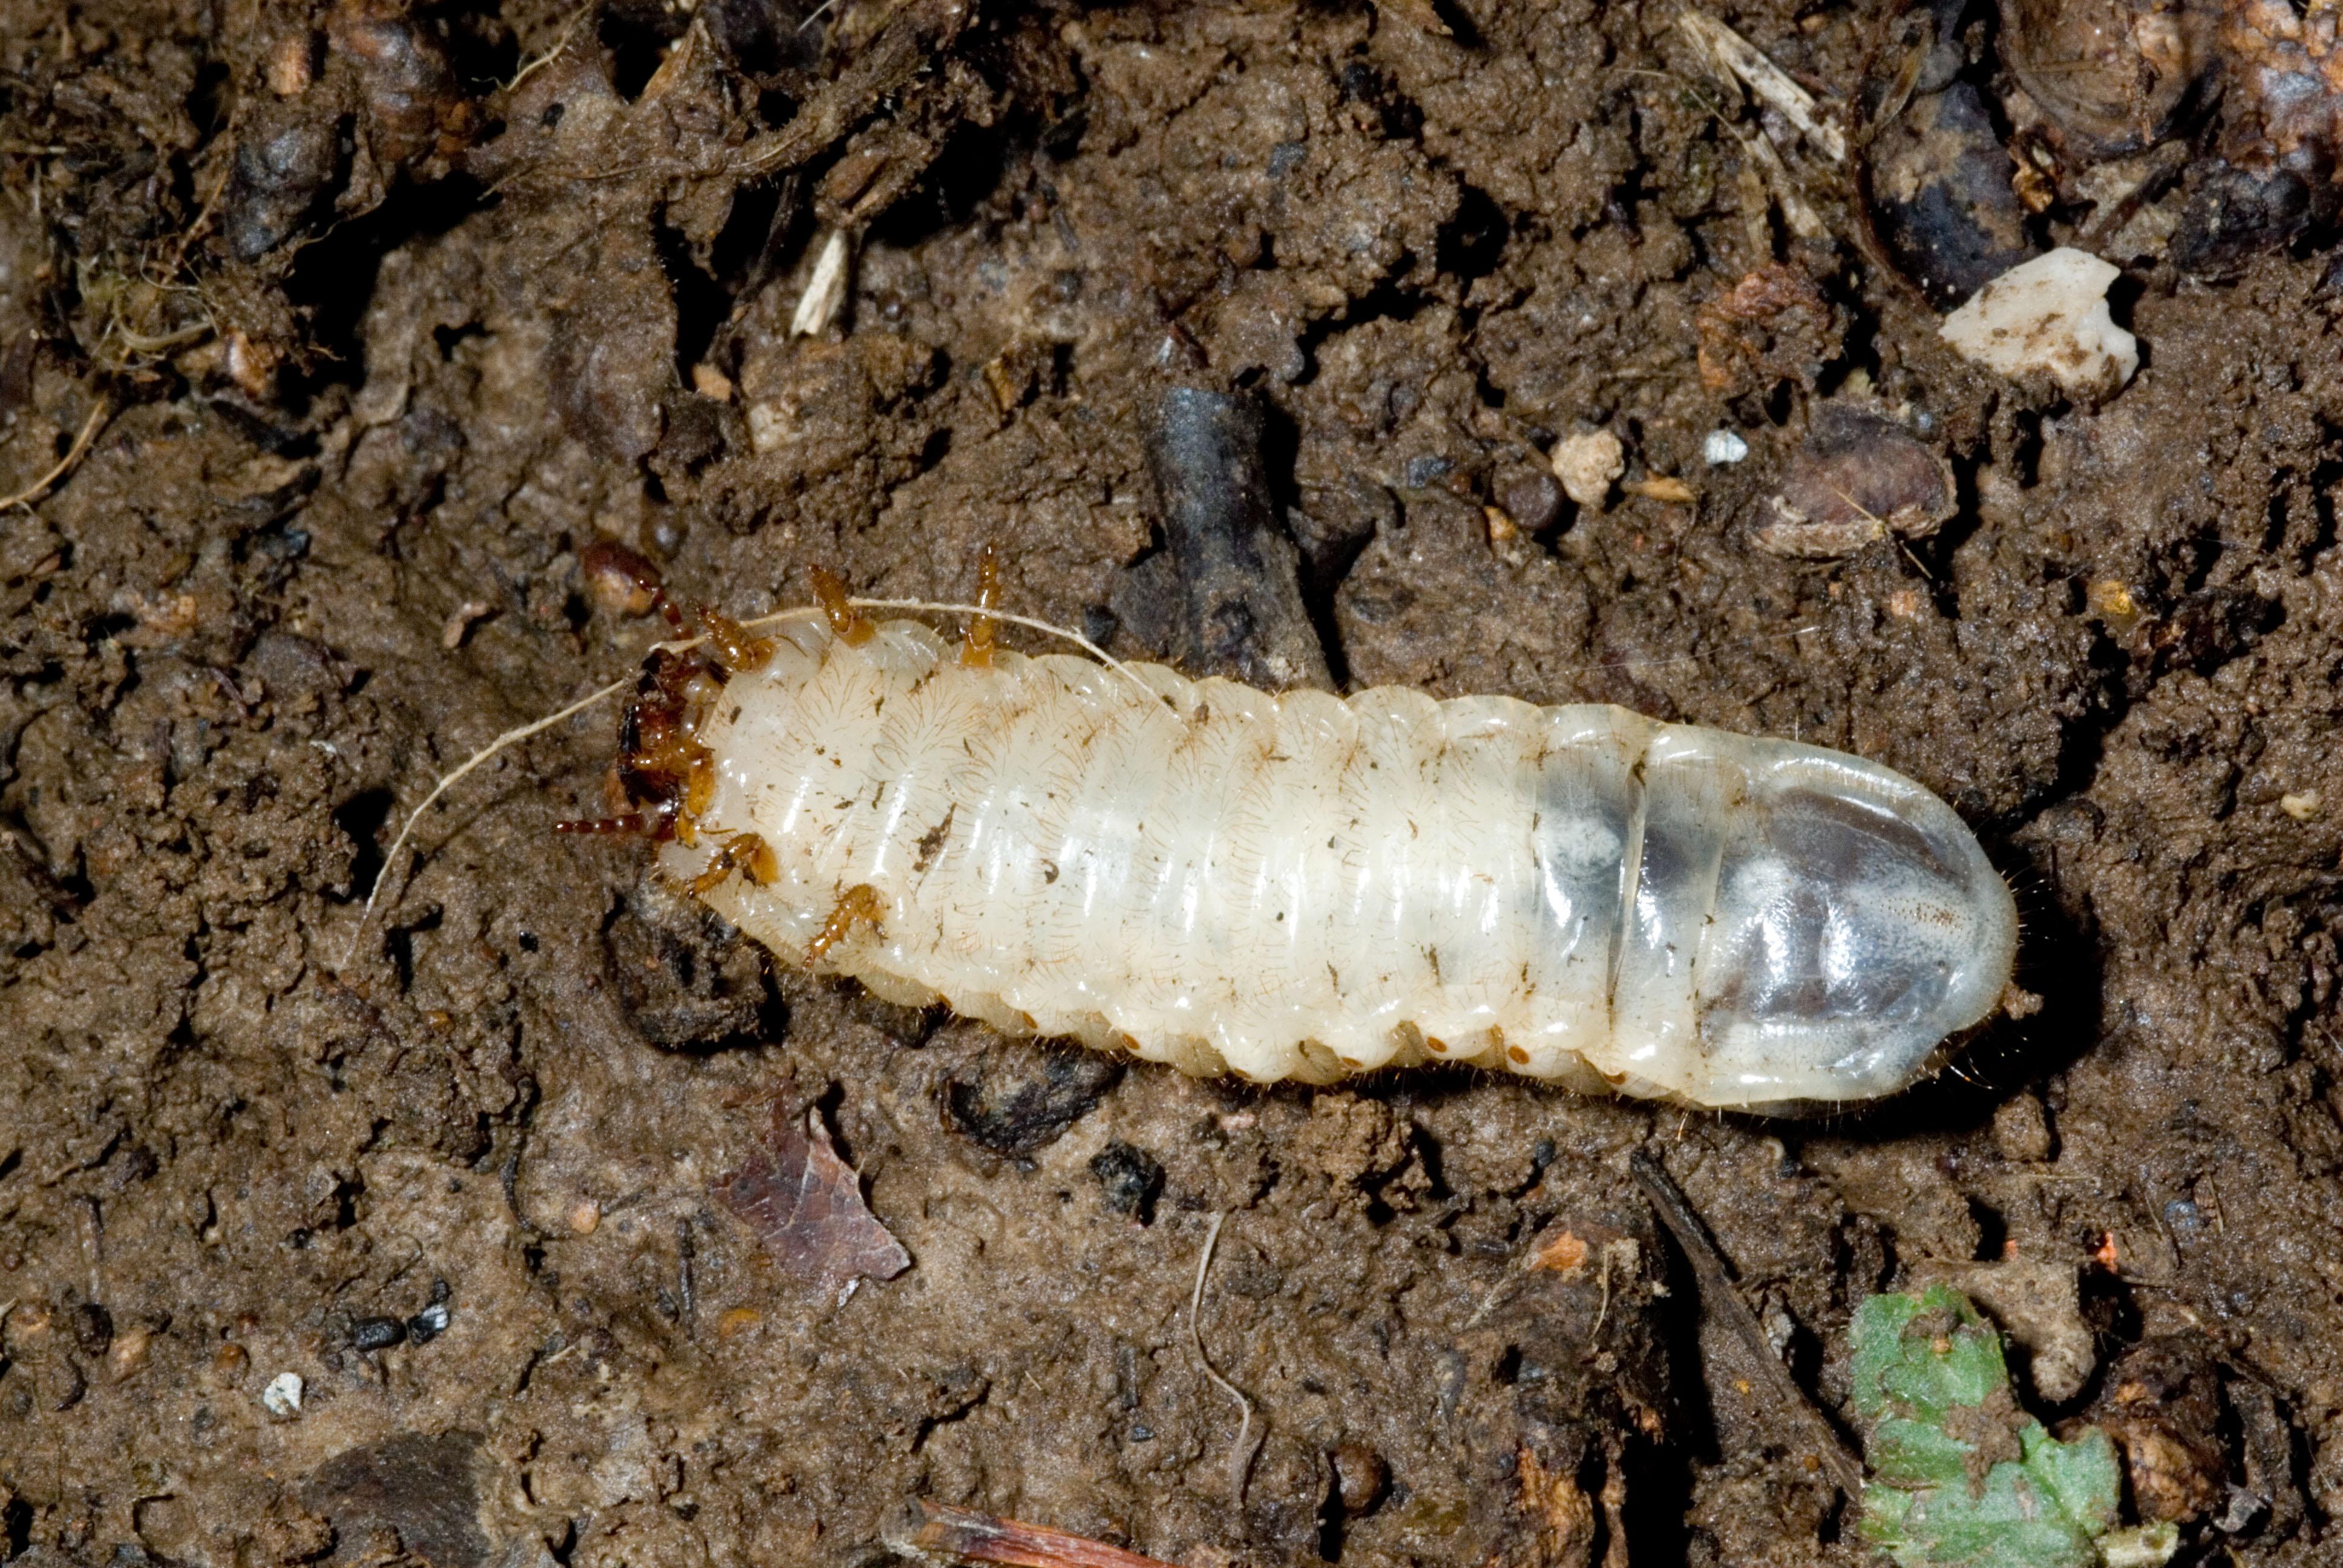 Green June beetle larva (Bessin, UKY)